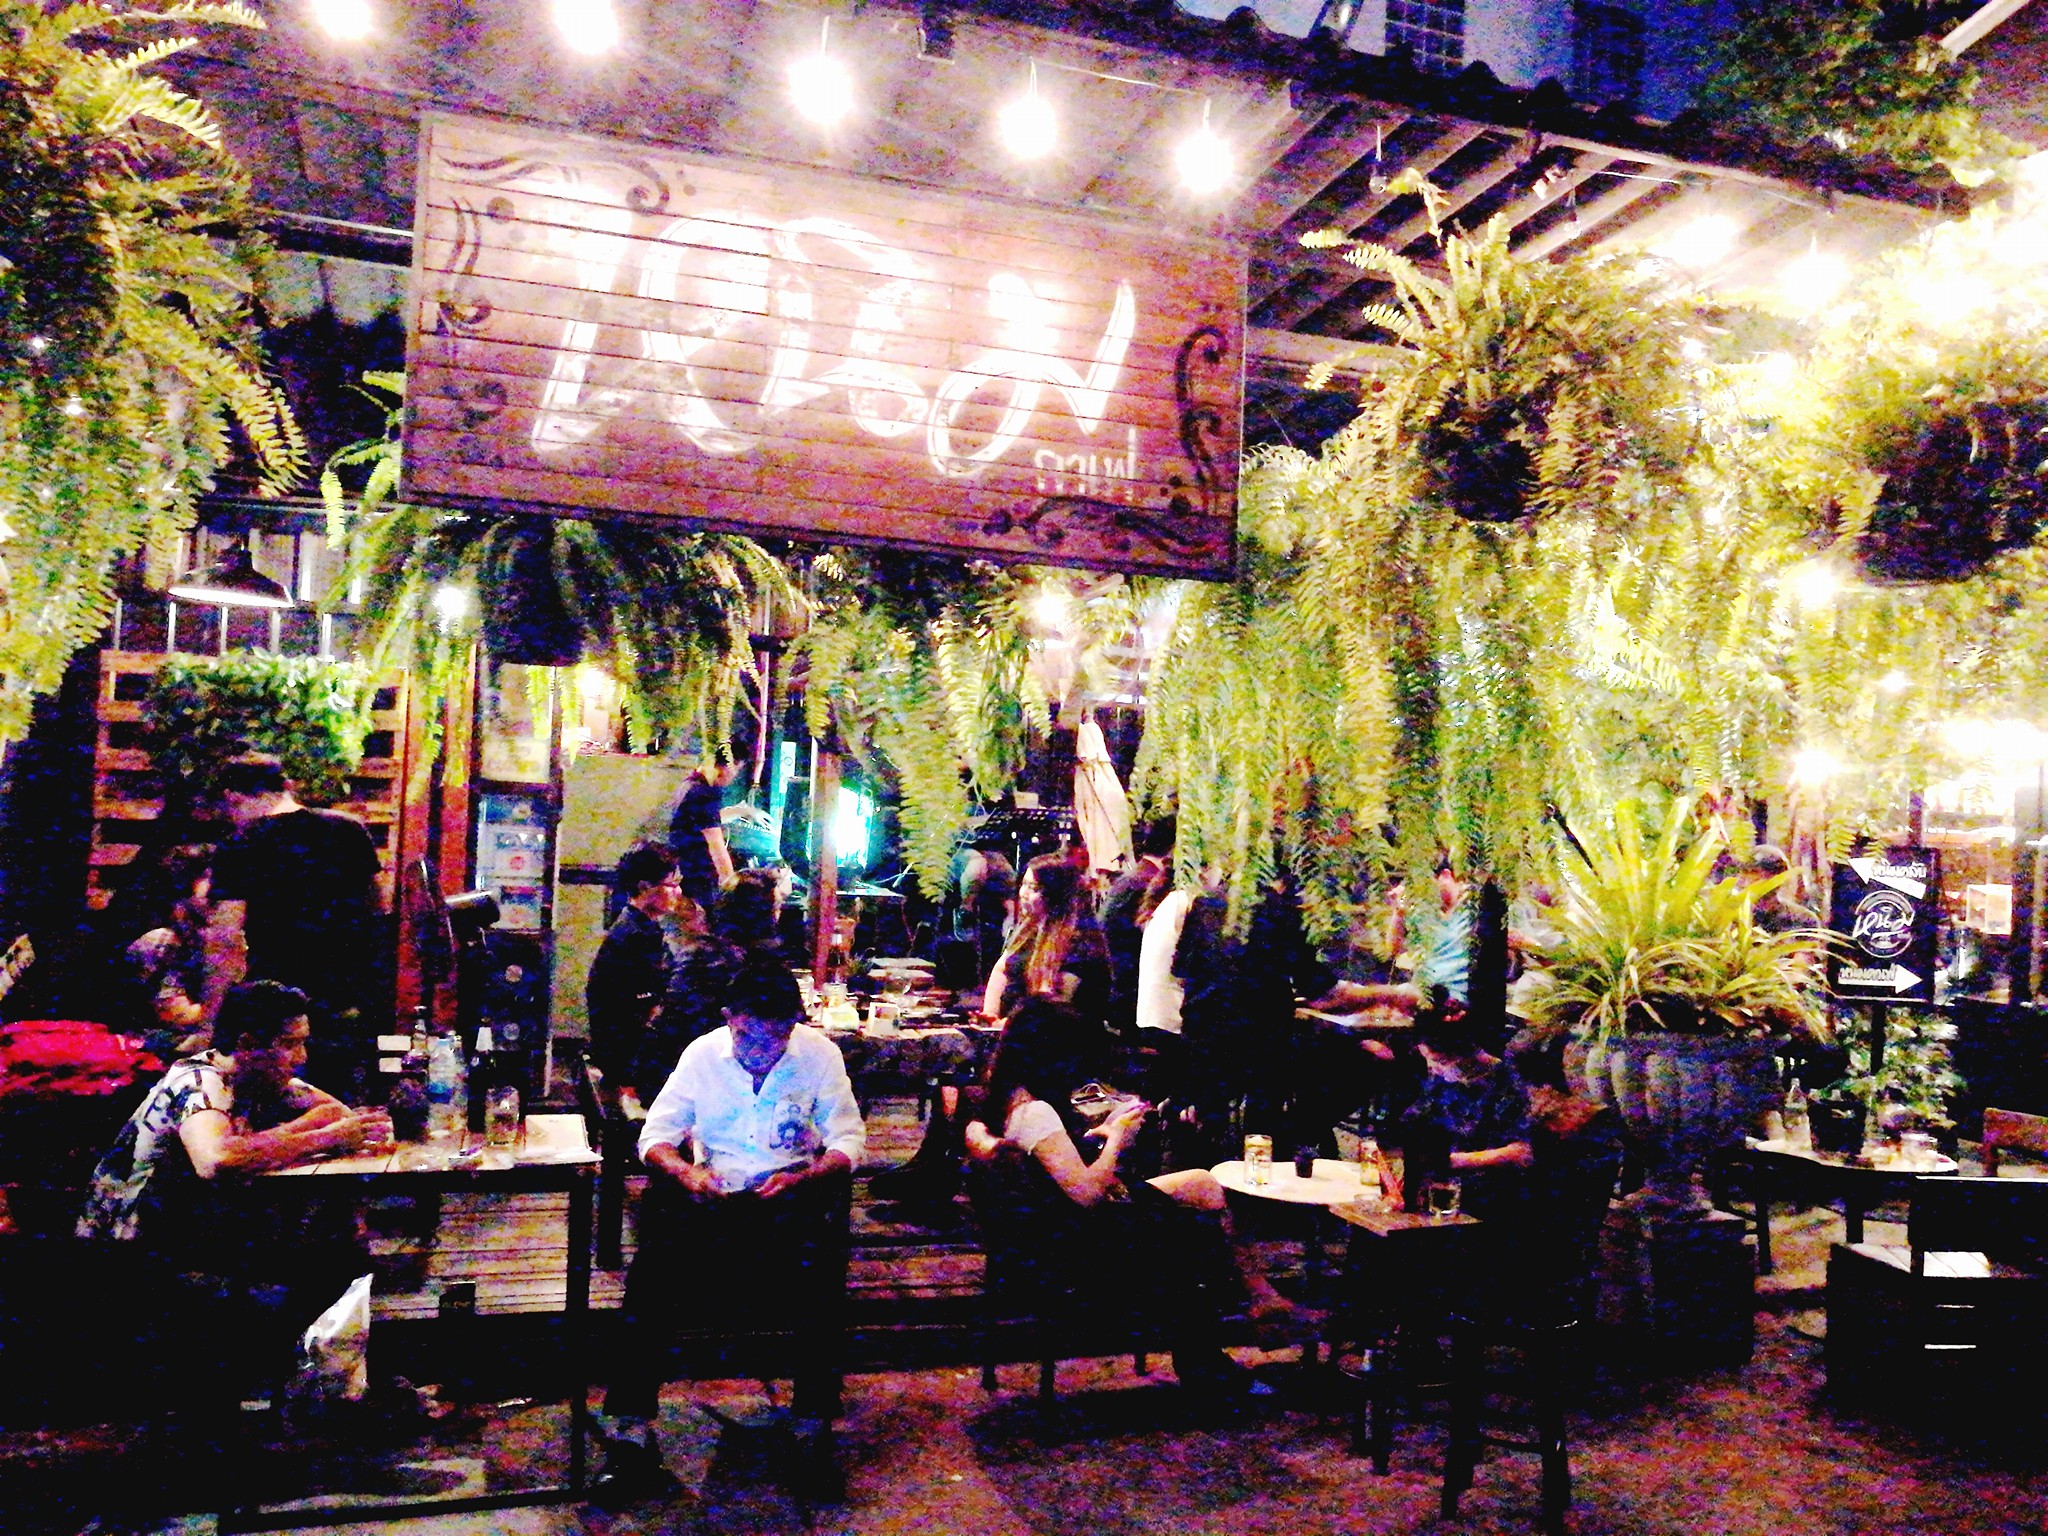 Nim cafe (หนิม คาเฟ่) : Bangkok (กรุงเทพมหานคร)